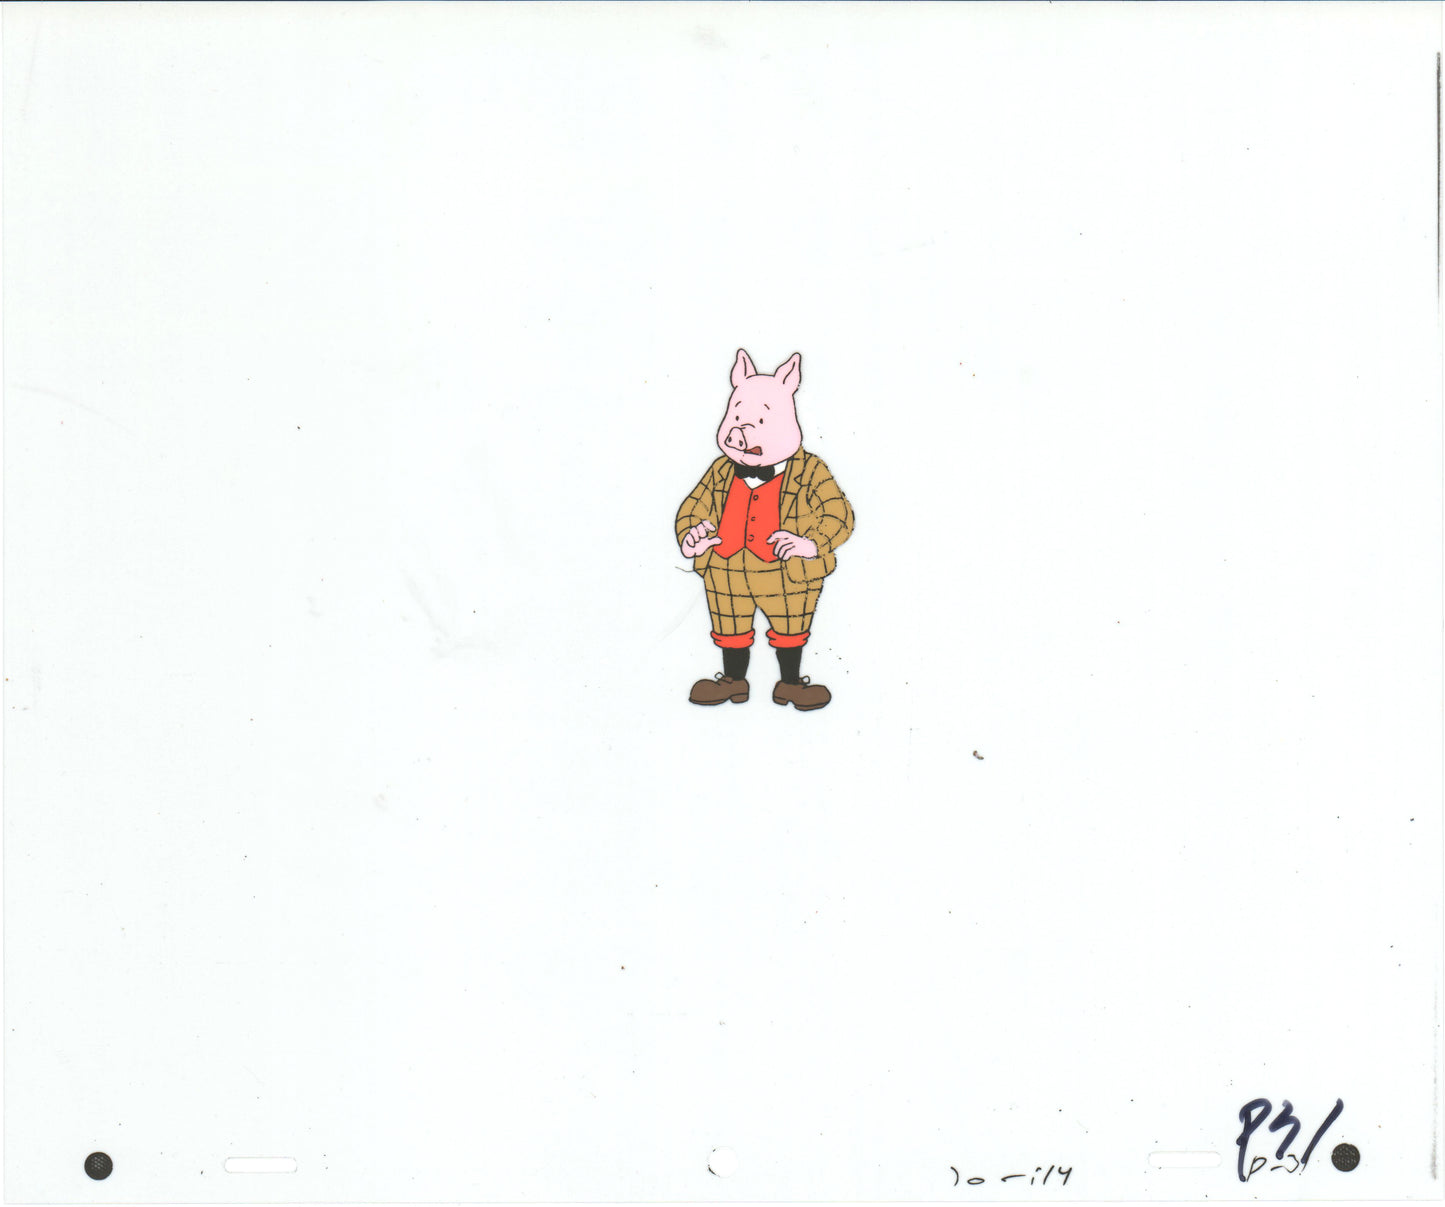 RUPERT Bear Podgy Pig Original Production Animation Cel from the Cartoon by Nelvana Tourtel Animation 1990s 8-326